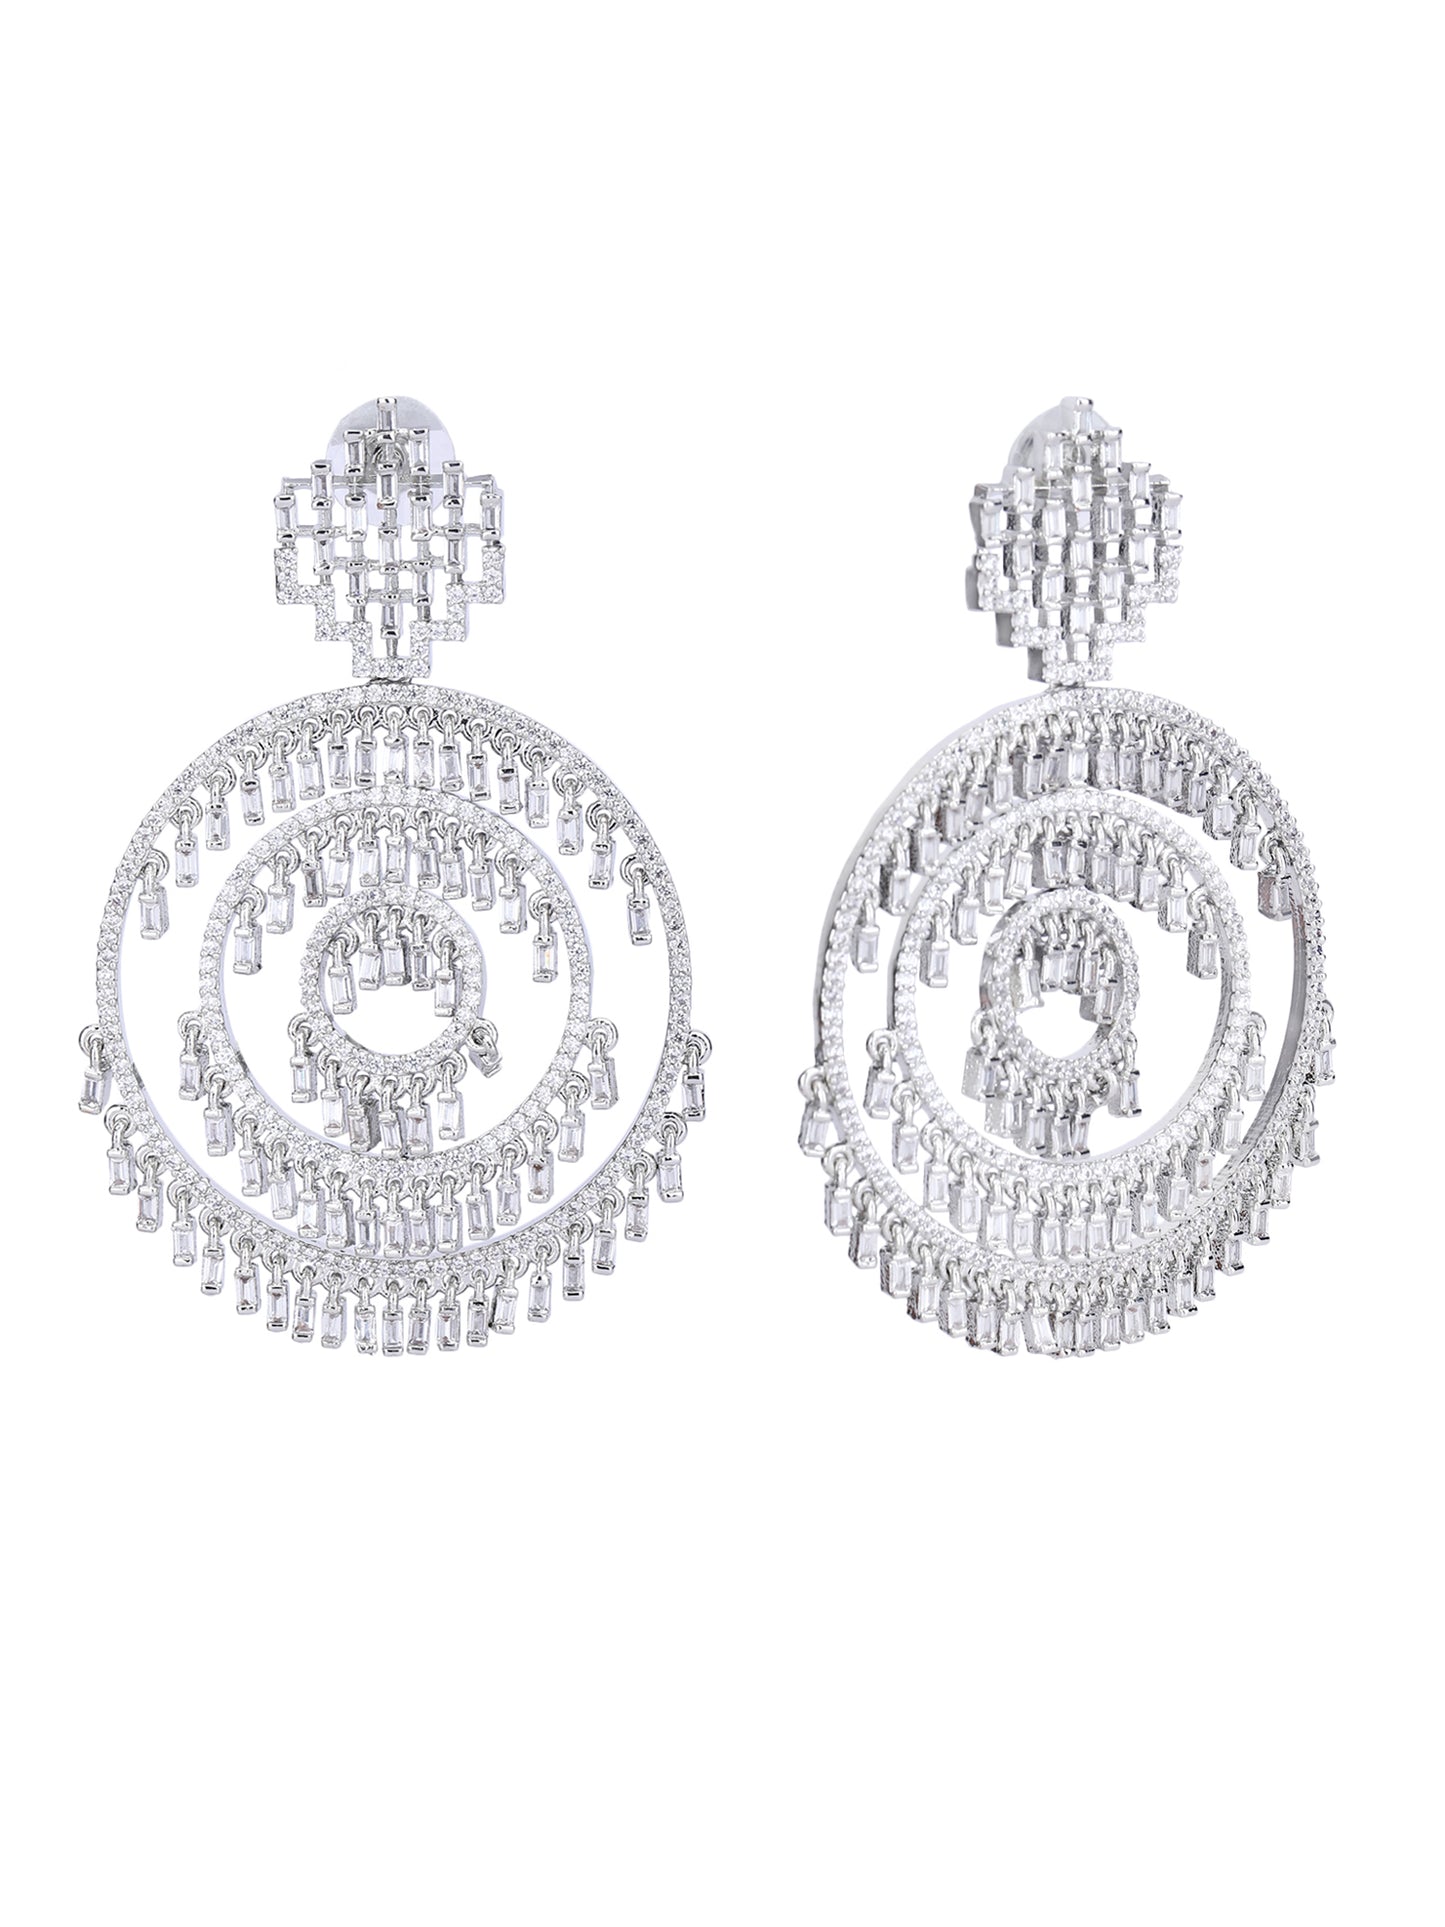 Rhodium Plated American Diamond Zircon White Earring Set For Women and Girls